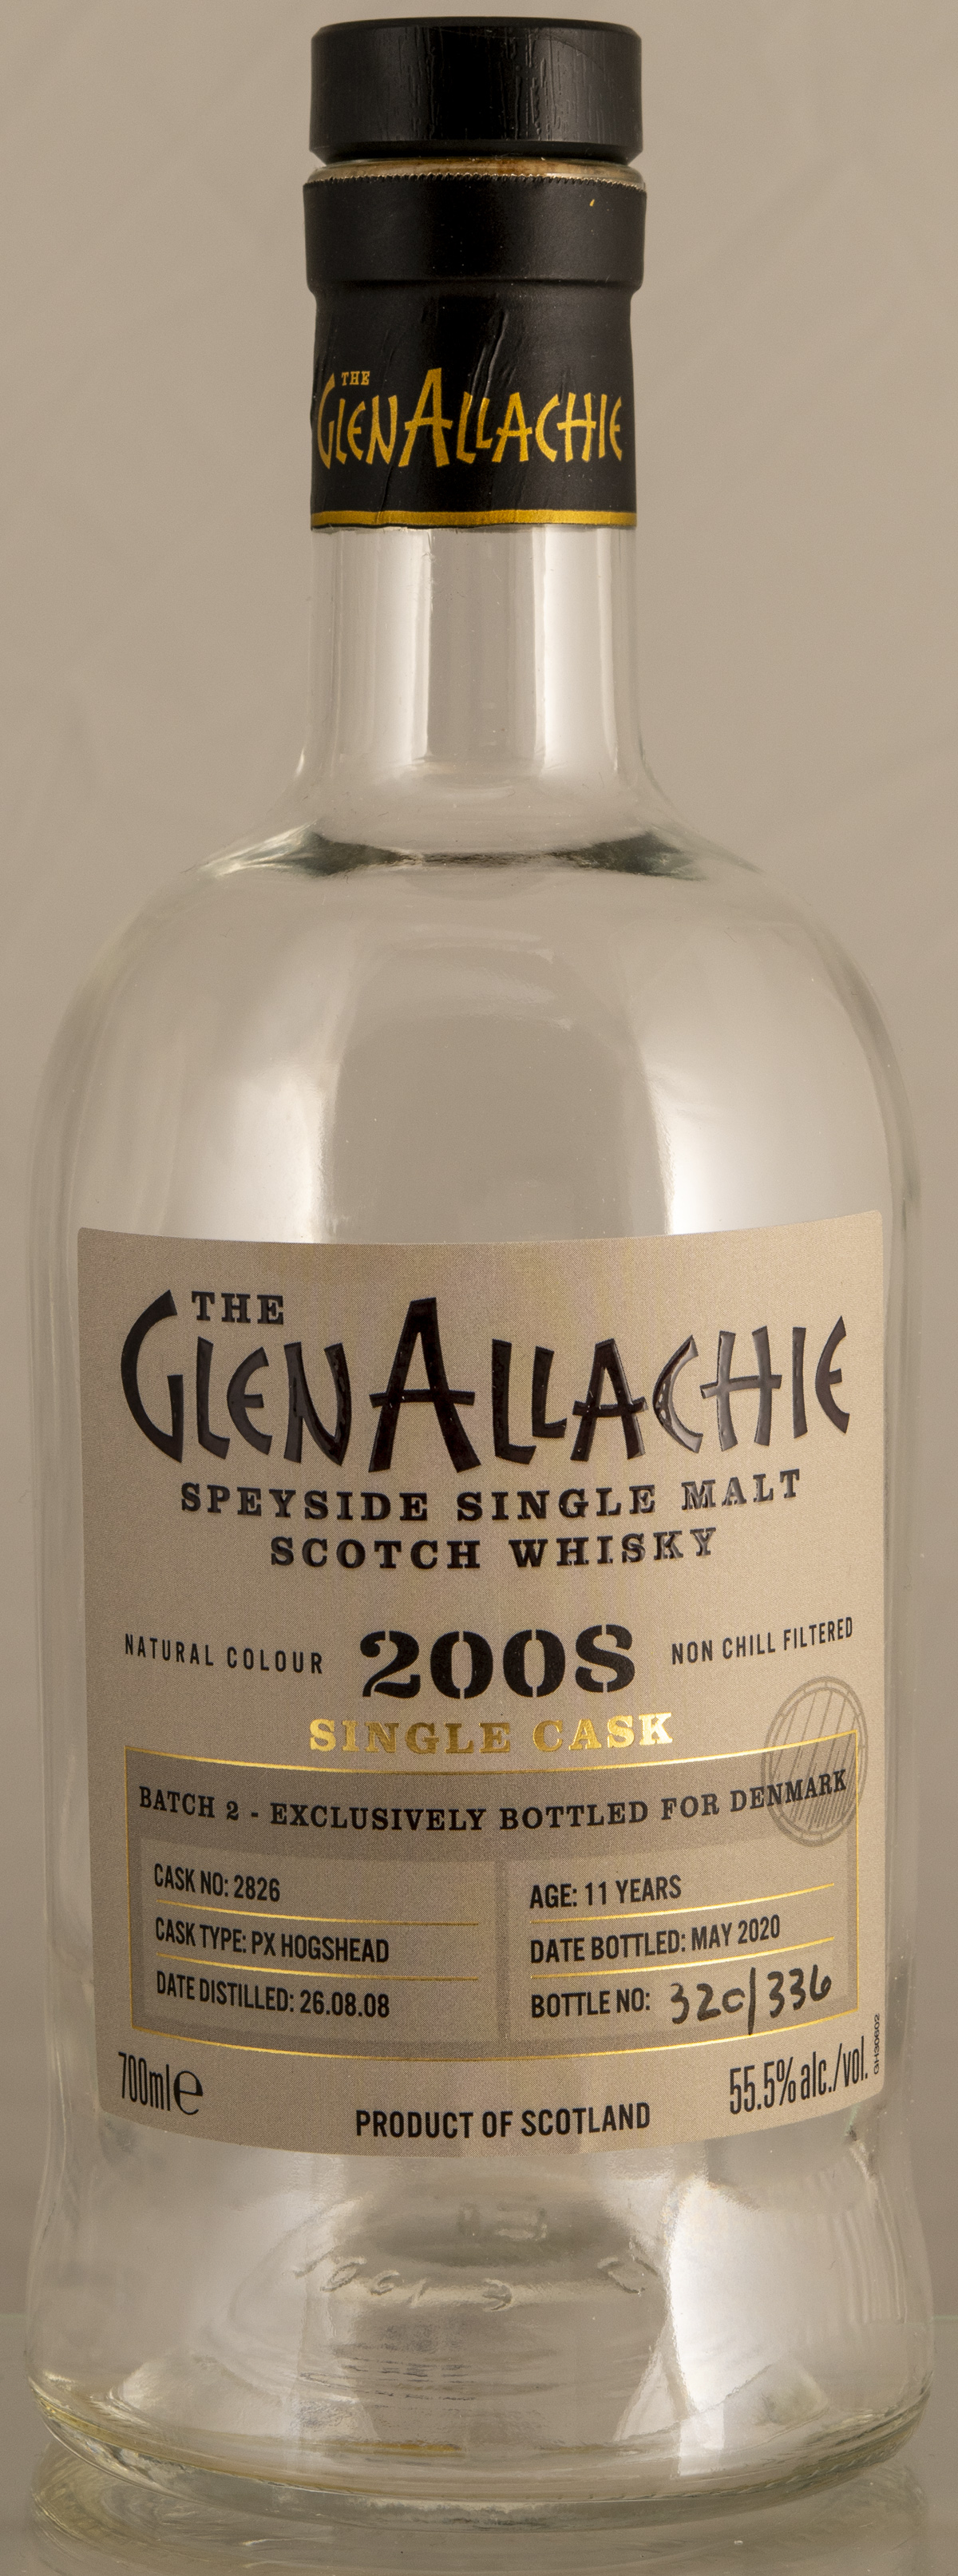 Billede: D85_8408 - The GlenAllachie 2008 single cak 2826 PX Hogshead - bottle front.jpg